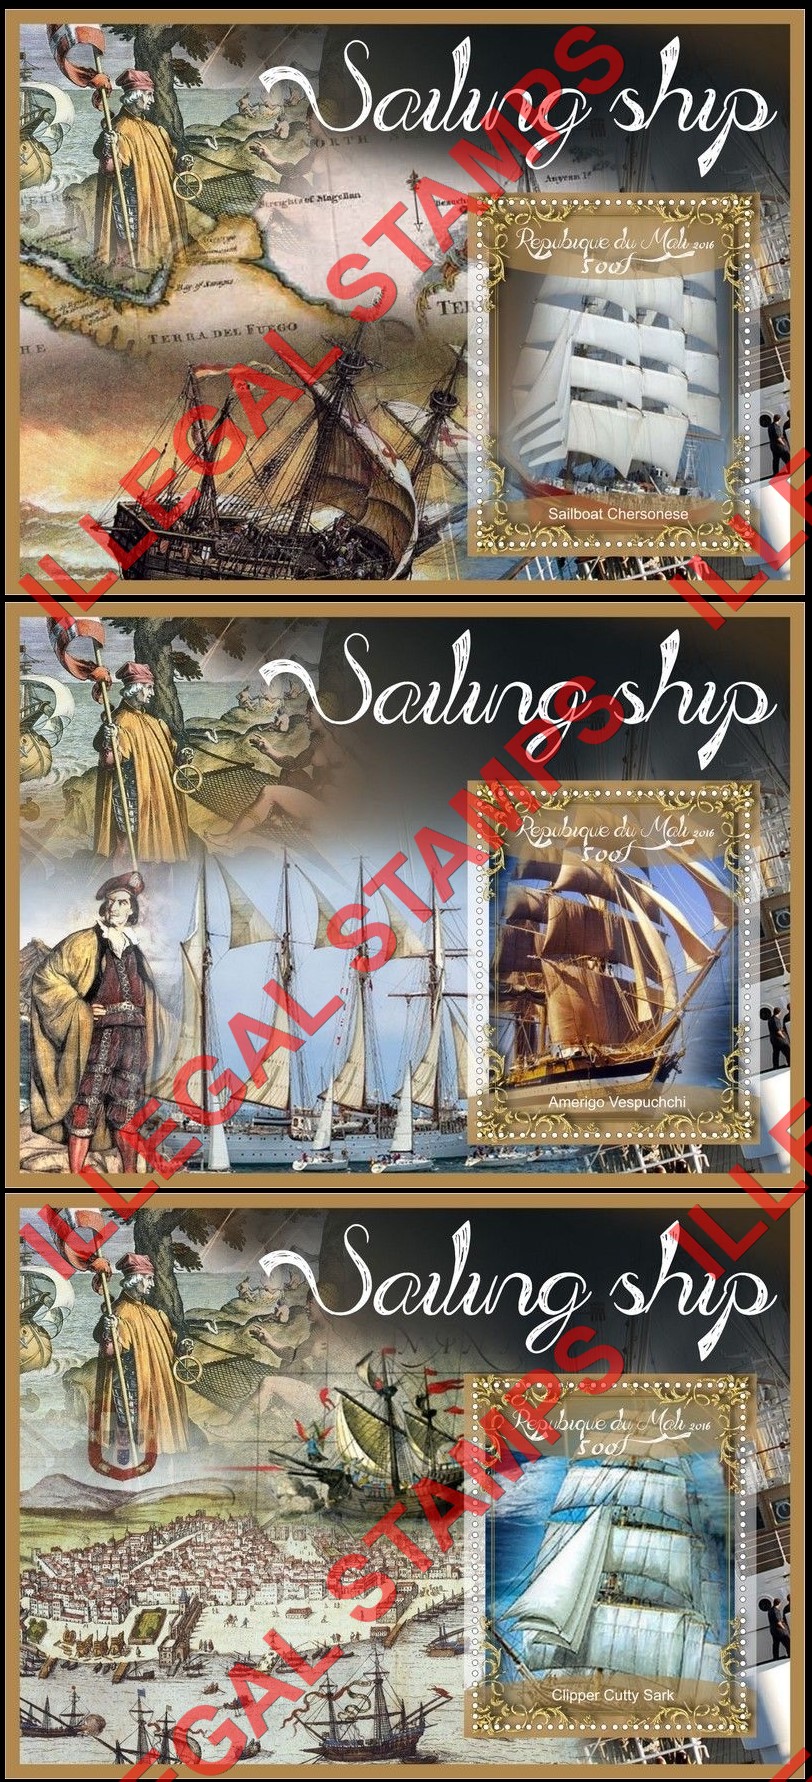 Mali 2016 Sailing Ships Illegal Stamp Souvenir Sheets of 1 (Part 2)